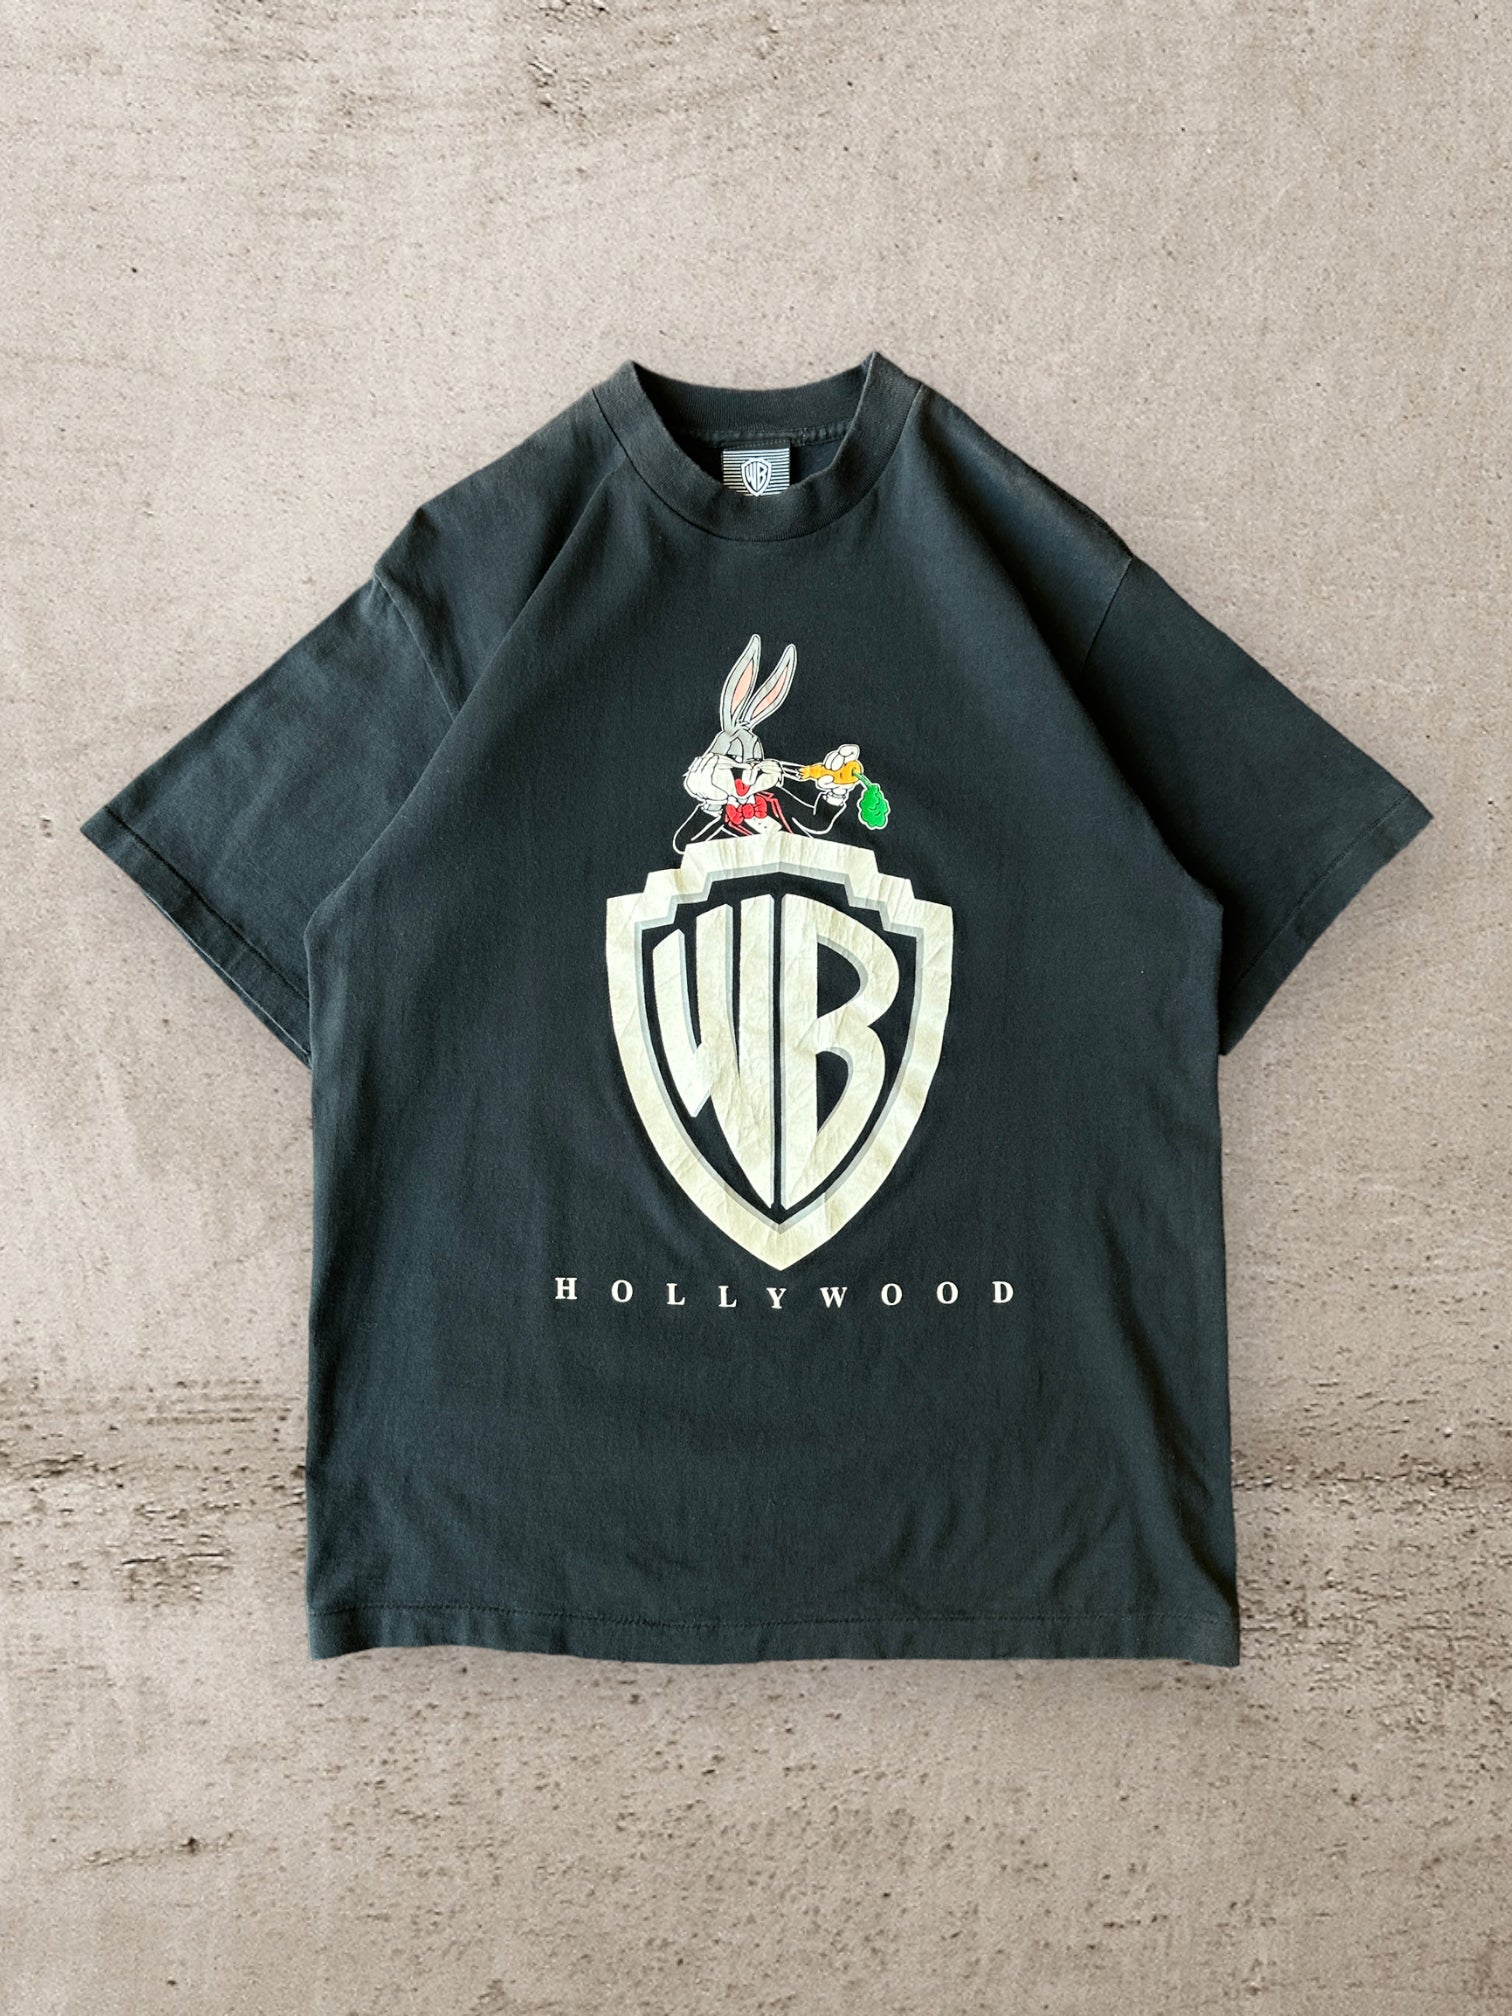 90s Warner Bros Hollywood T-Shirt - Large